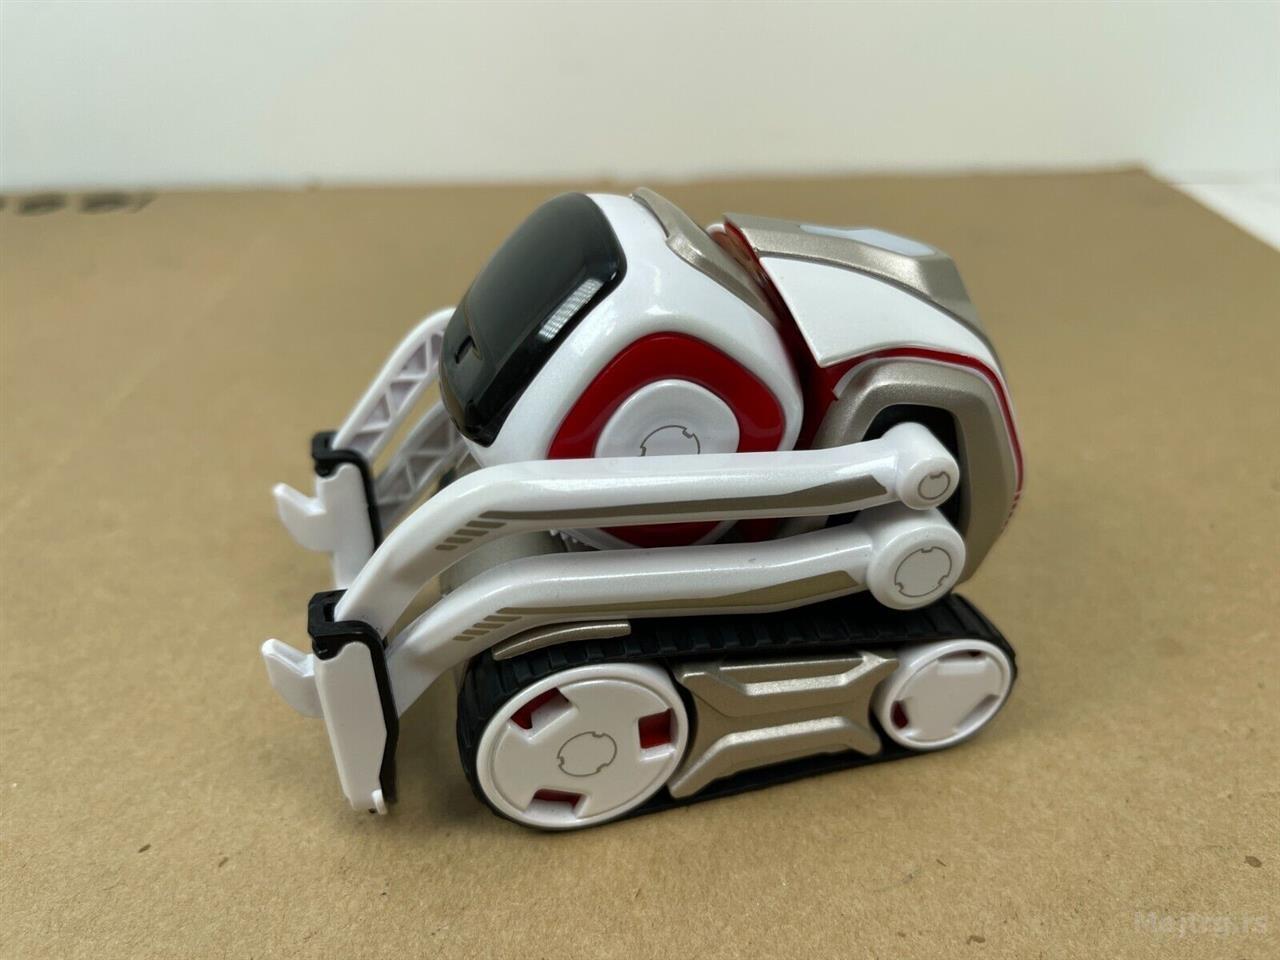 Anki Cozmo Robot Toy 000-0048 White/Red w/ Charger | Valjevo